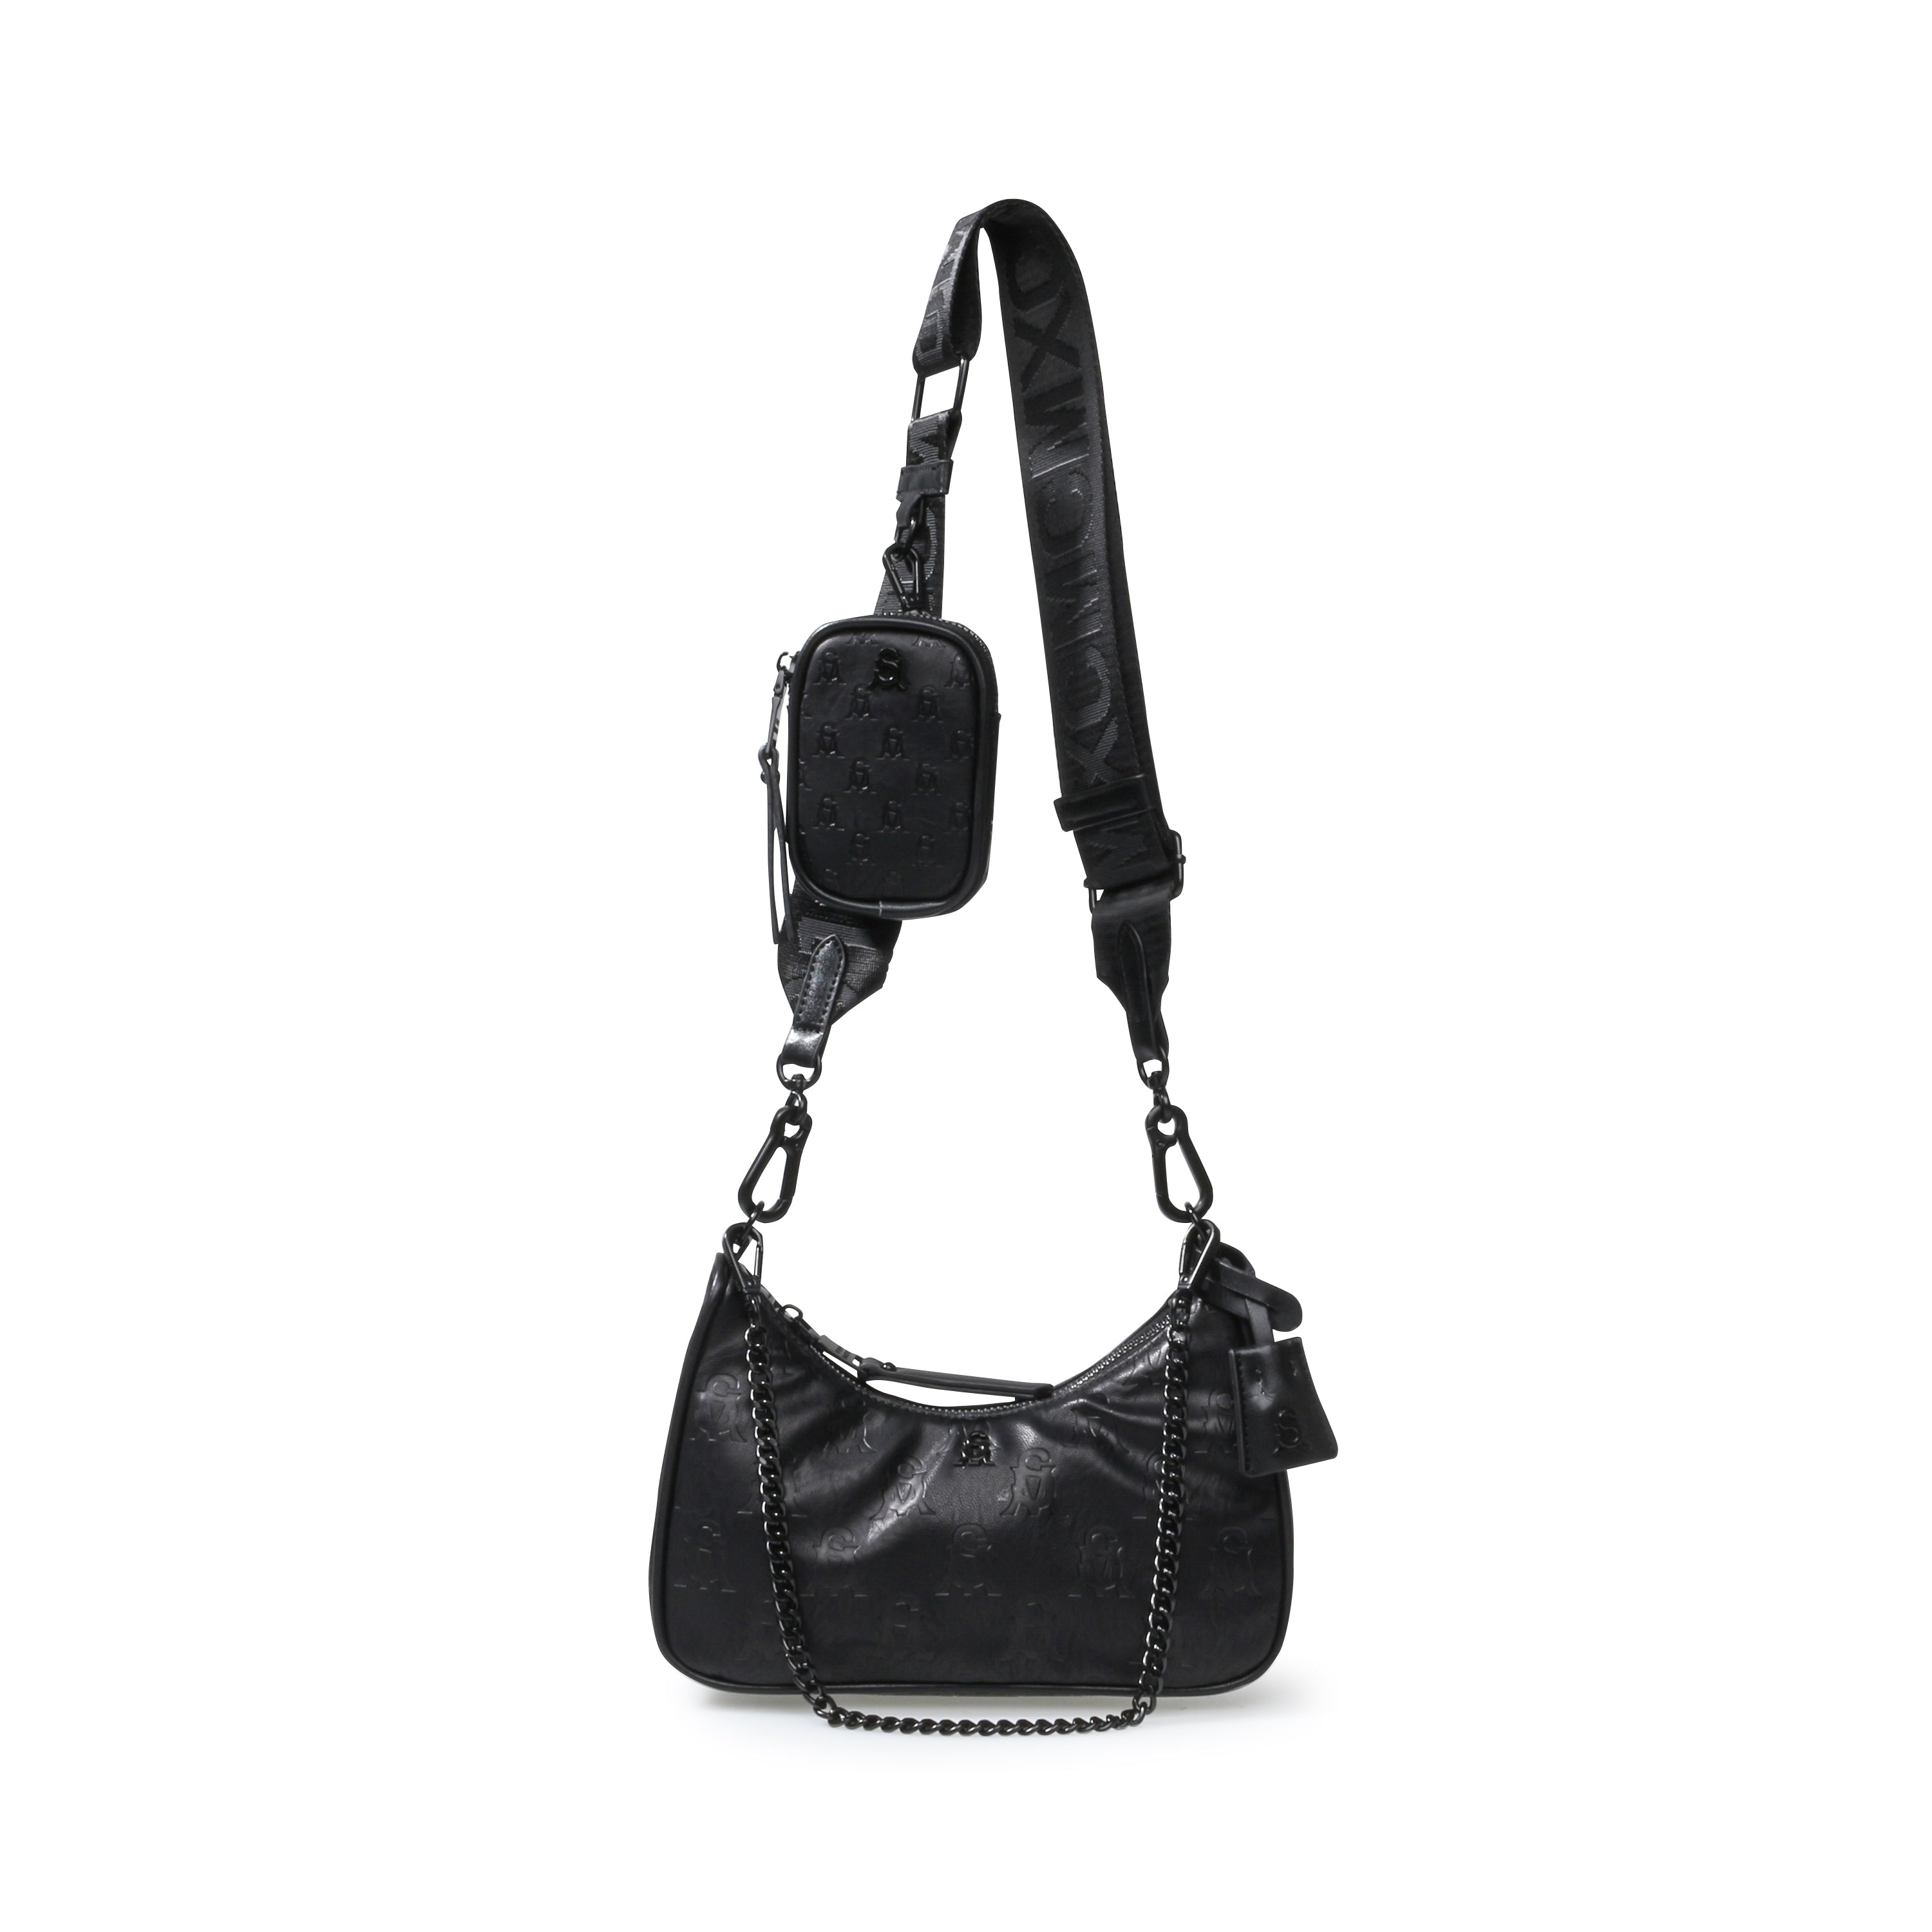 NWT Coach Domed Black Leather Handbag  Black leather handbags, Leather  handbags, Black leather